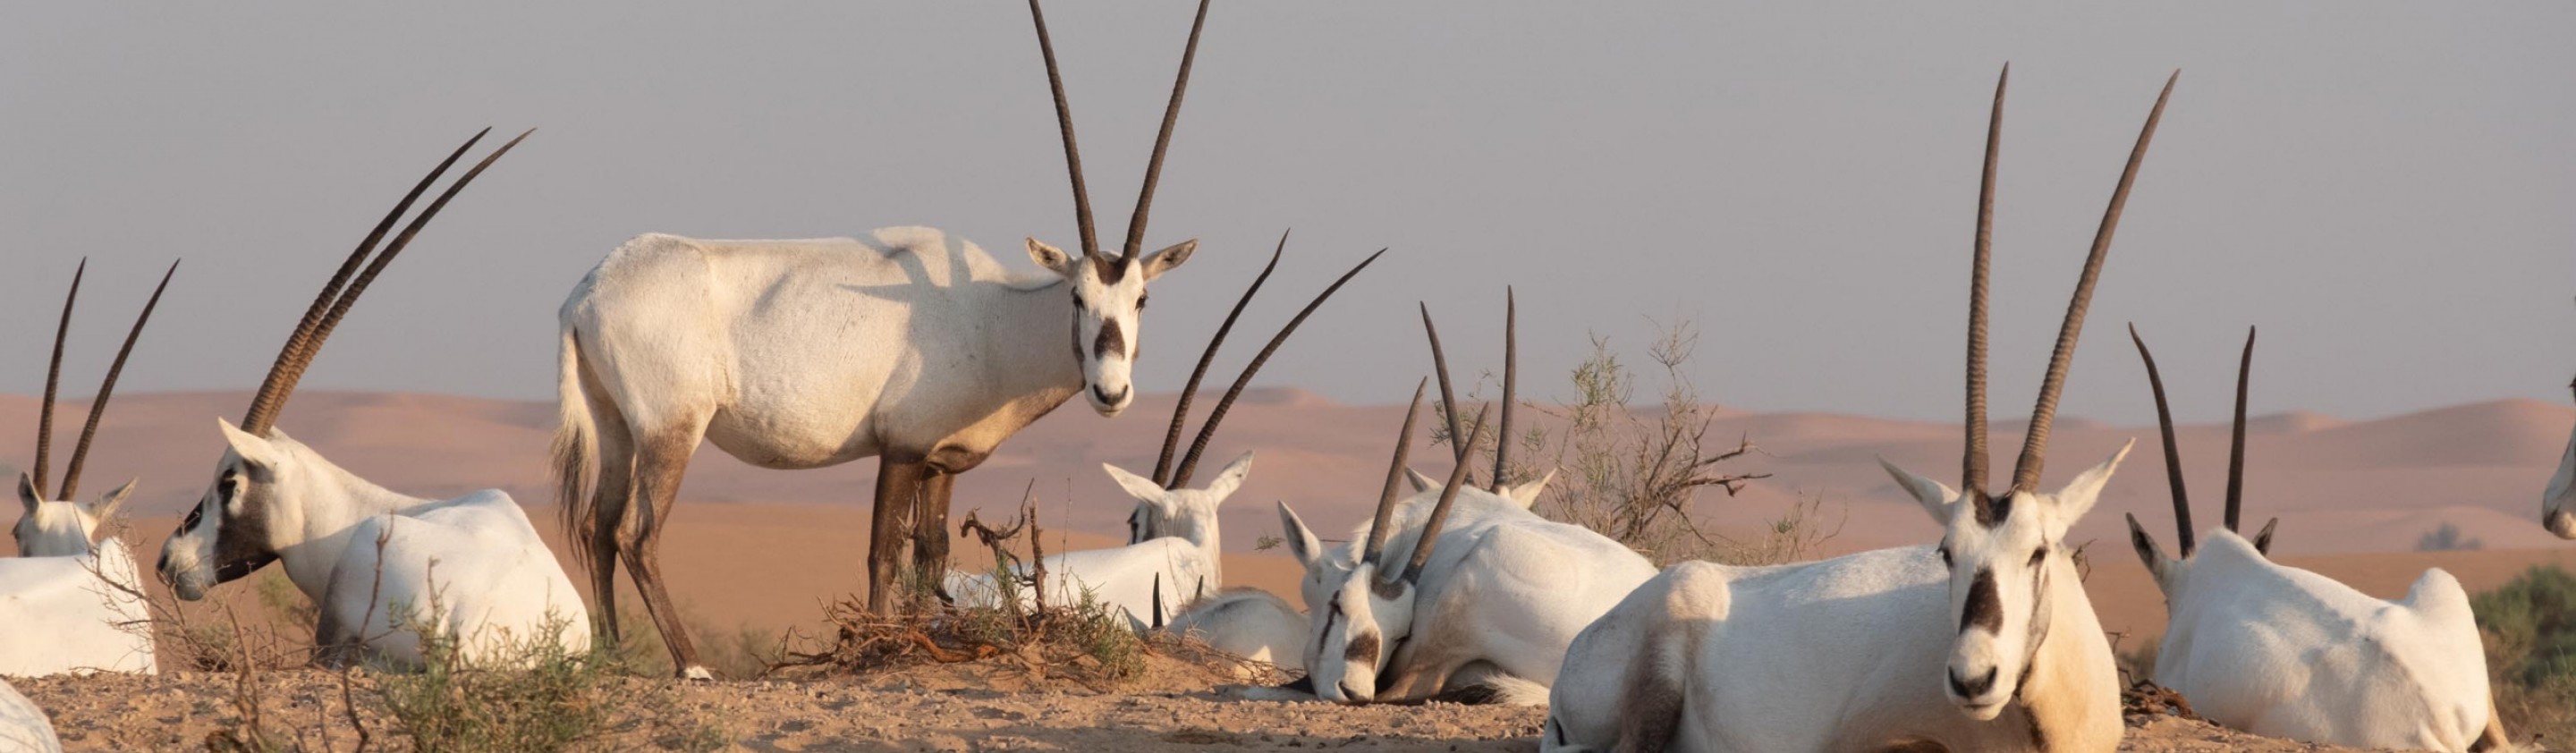 dubai desert conservation reserve, oryx, oliver wheeldon, UAE 